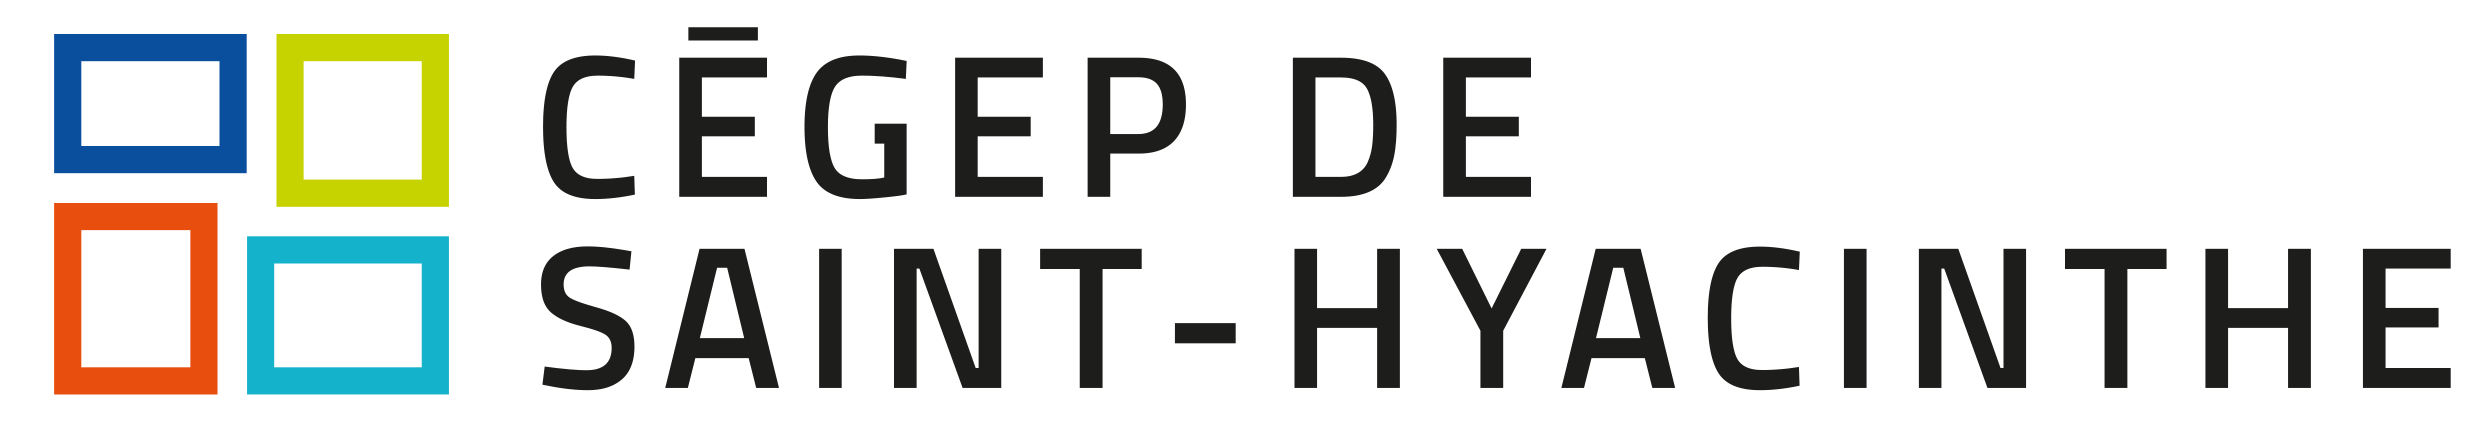 Logo Cégep Saint-Hyacinthe - Version Noire